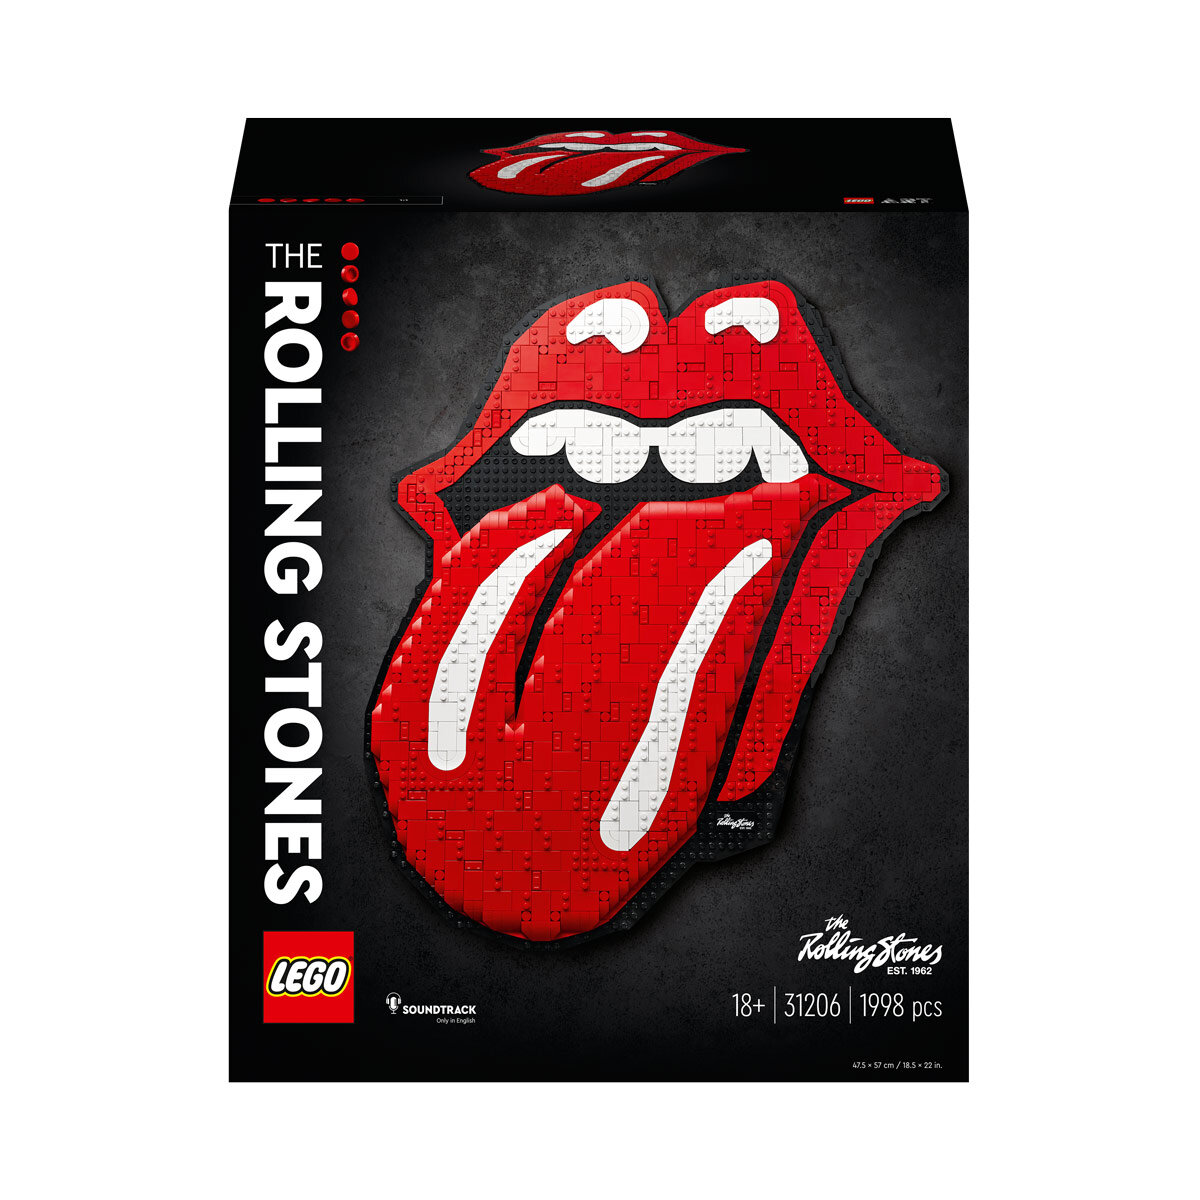 Buy LEGO ART The Rolling Stones Box Image at Costco.co.uk